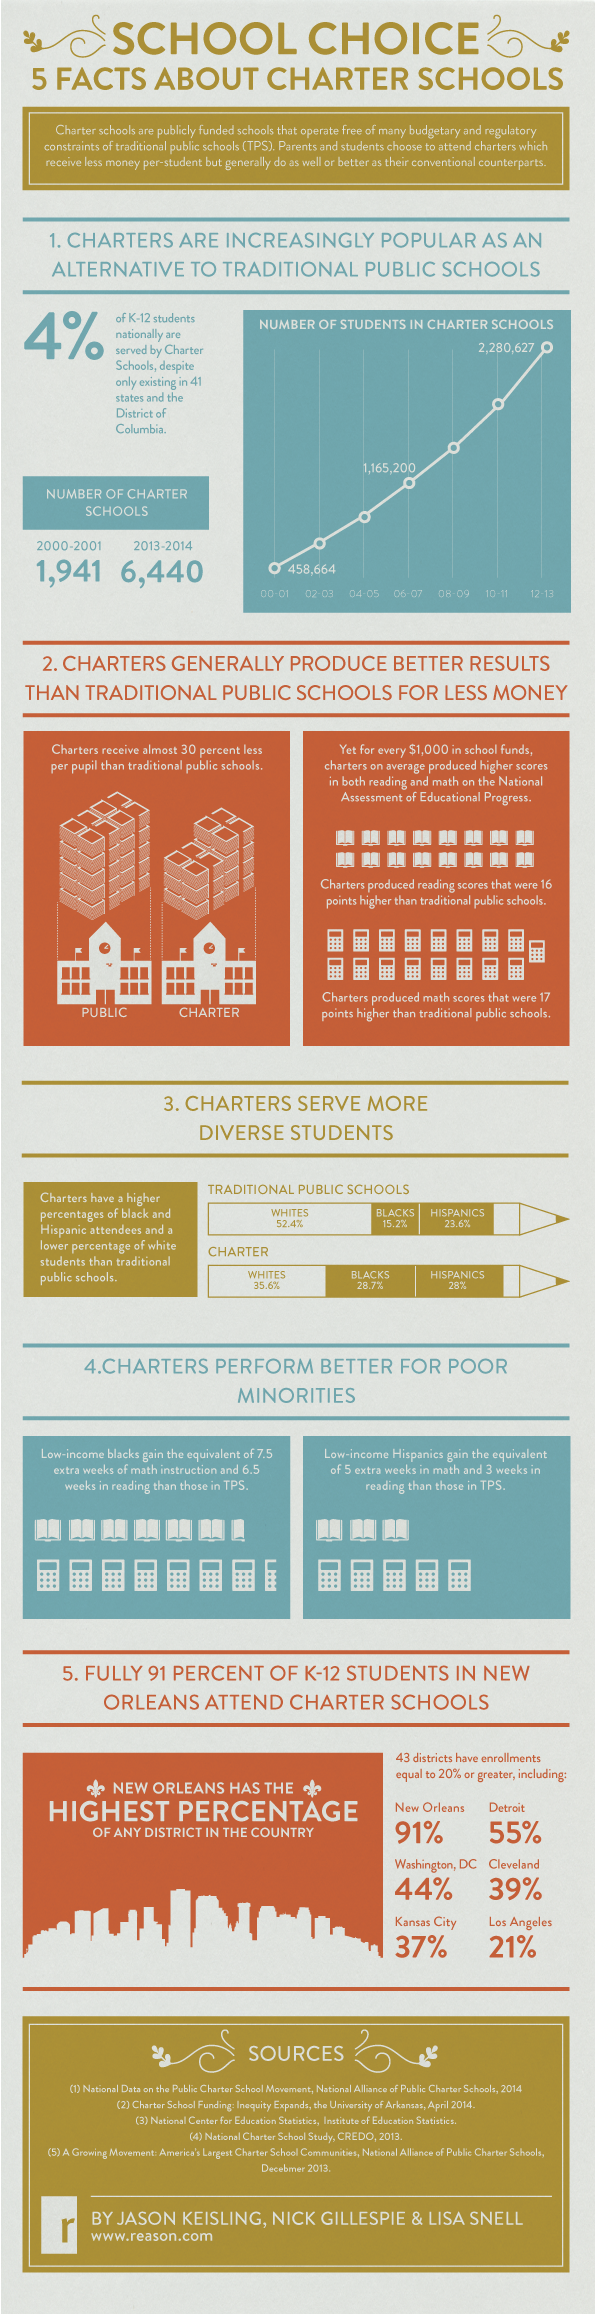 School Choice Infographic